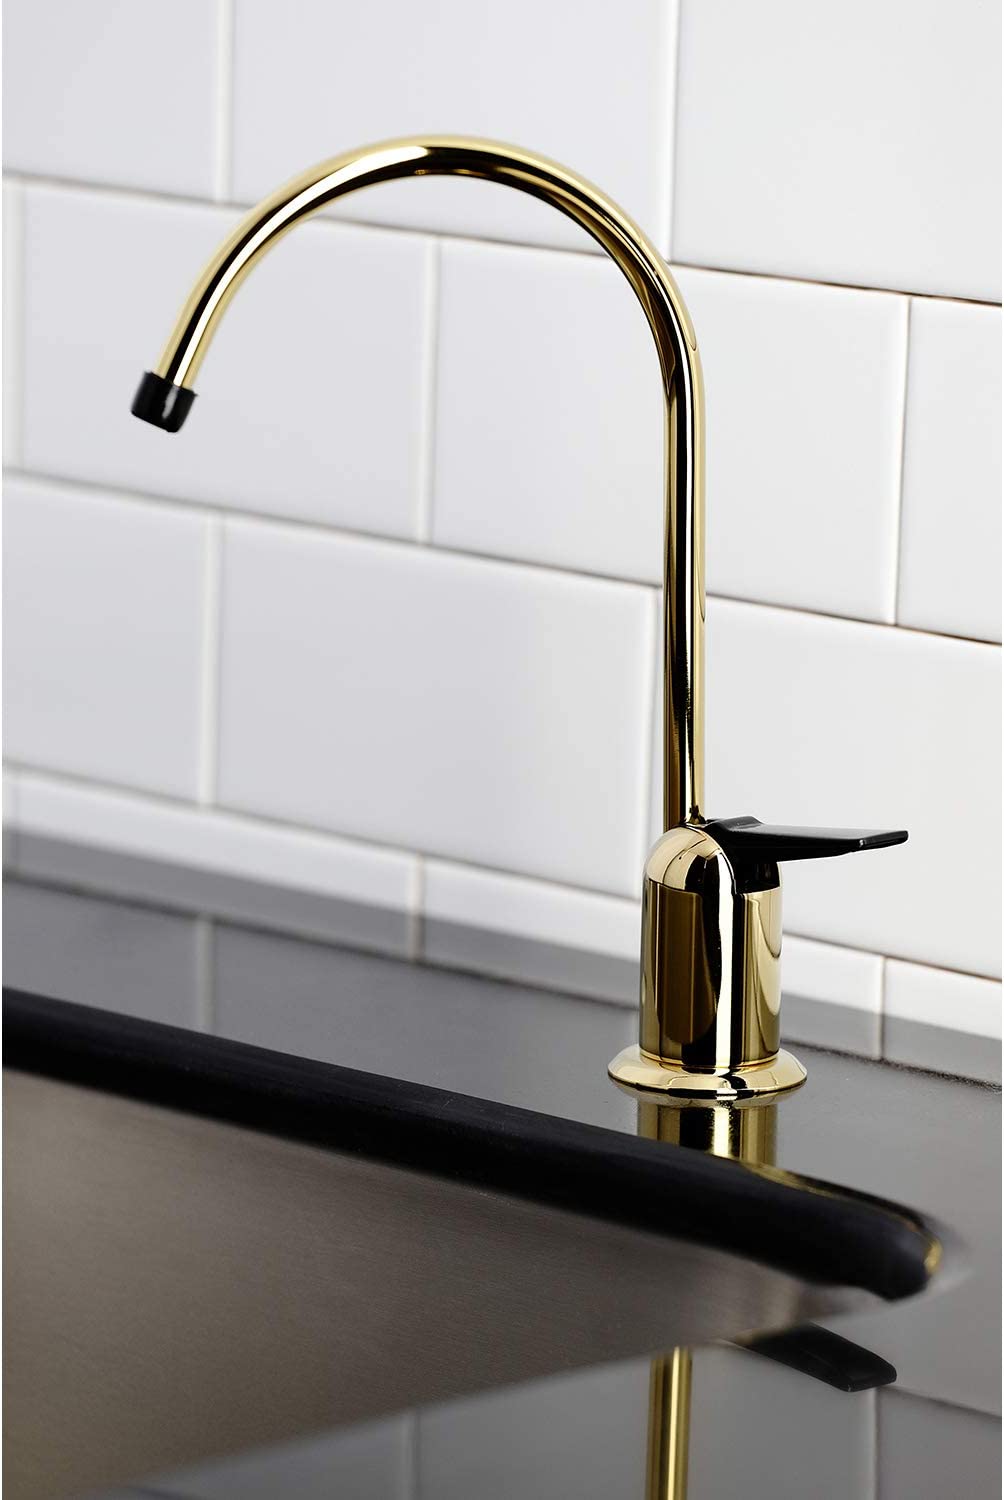 Kingston Brass K6192 Americana Water Filtration Faucet, Polished Brass